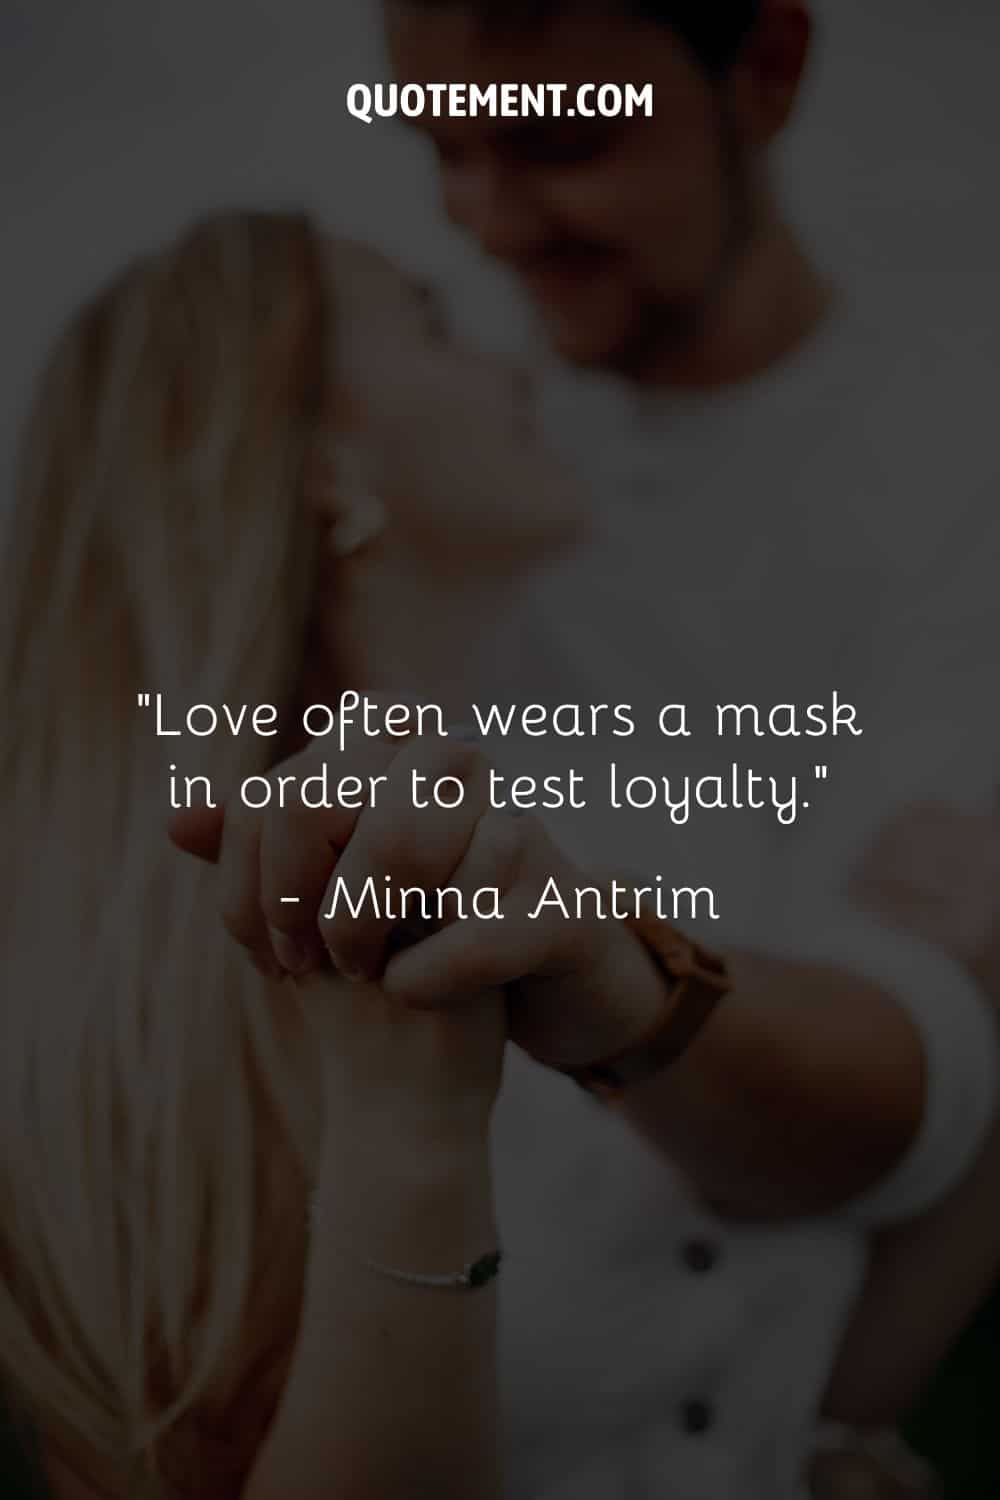 “Love often wears a mask in order to test loyalty.” — Minna Antrim